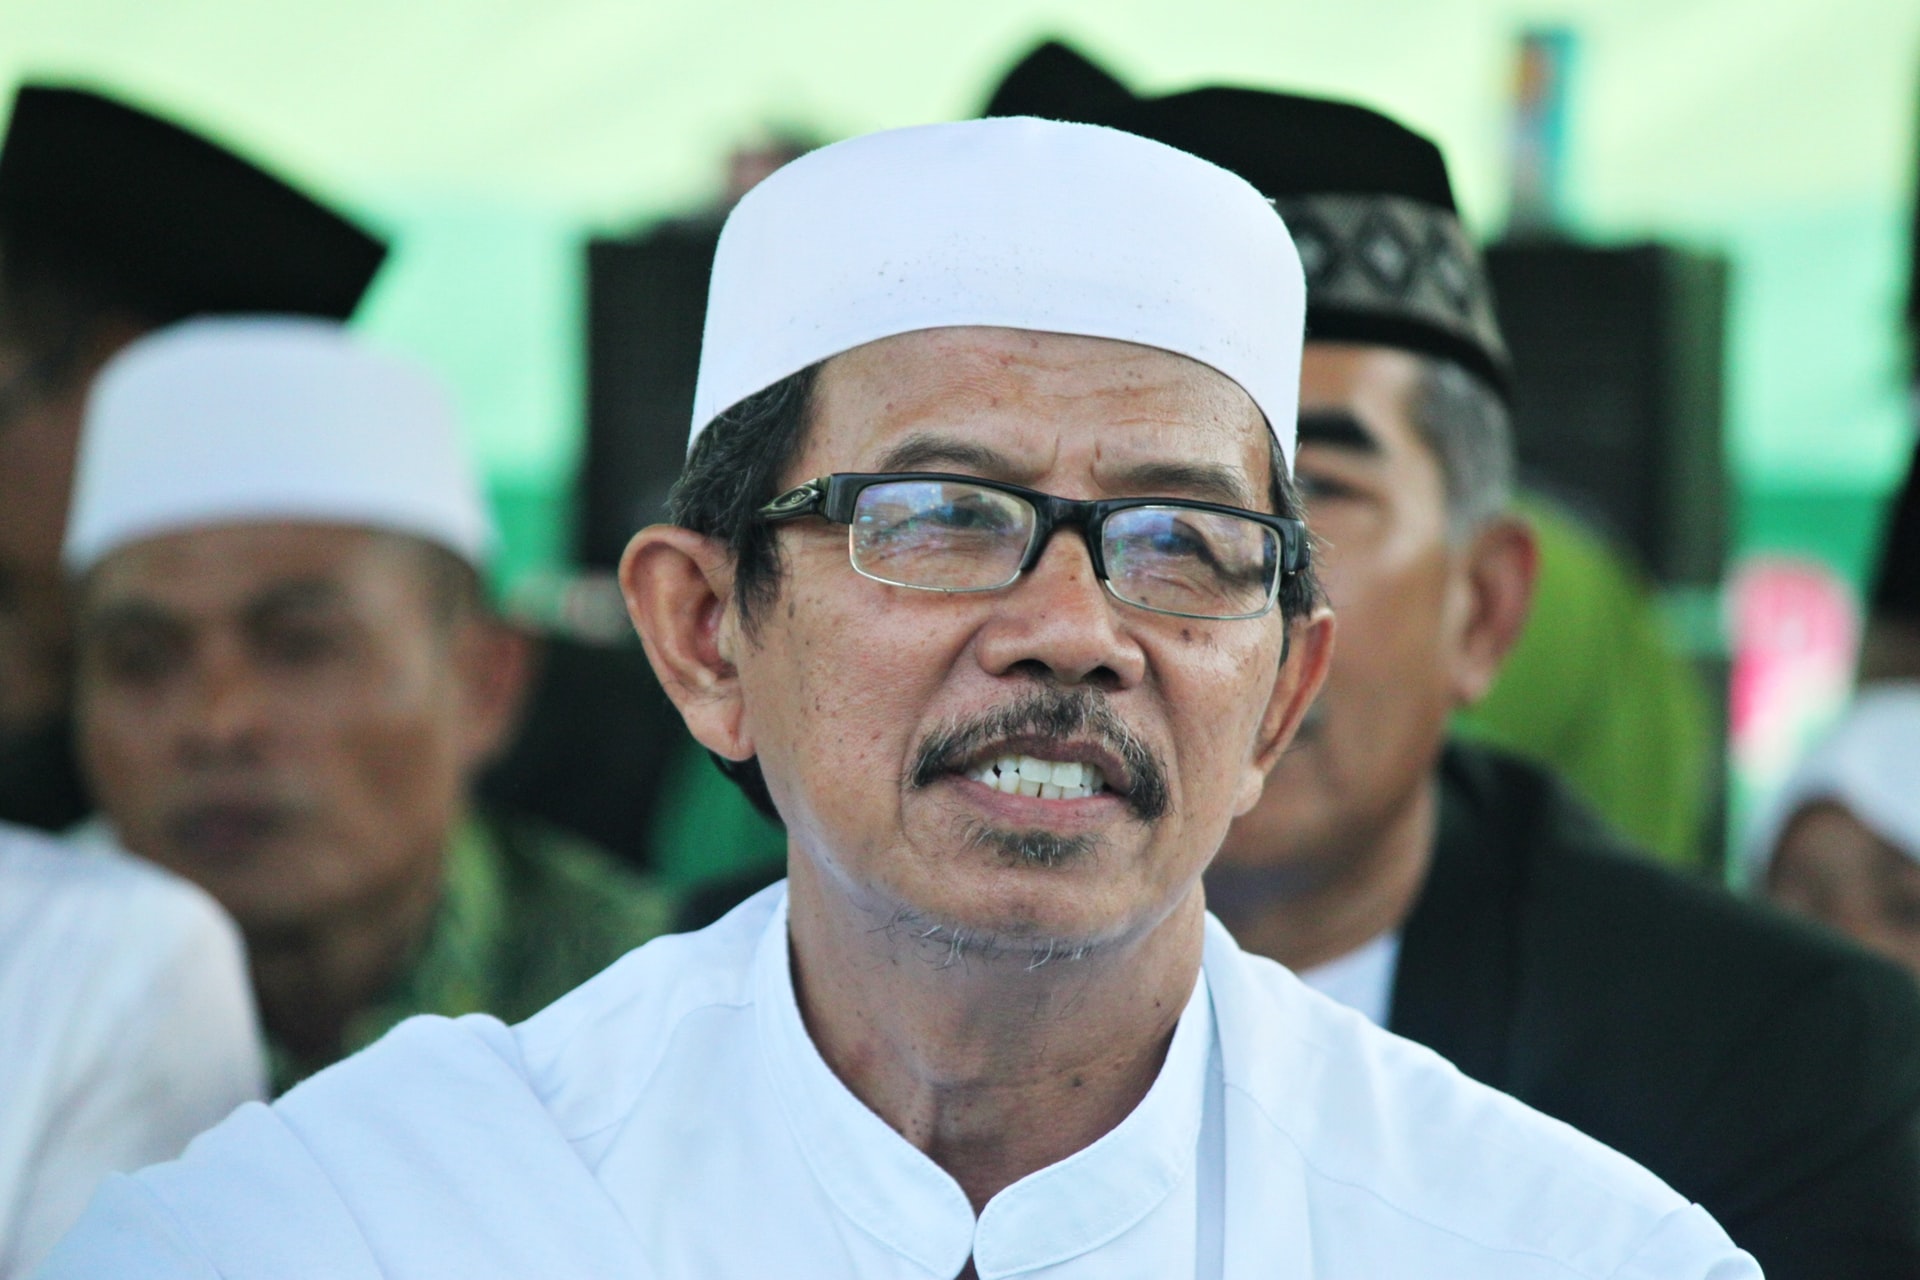 Индонезия мусульманский. Индонезийцы мусульмане. Мусульмане Индонезии фото.